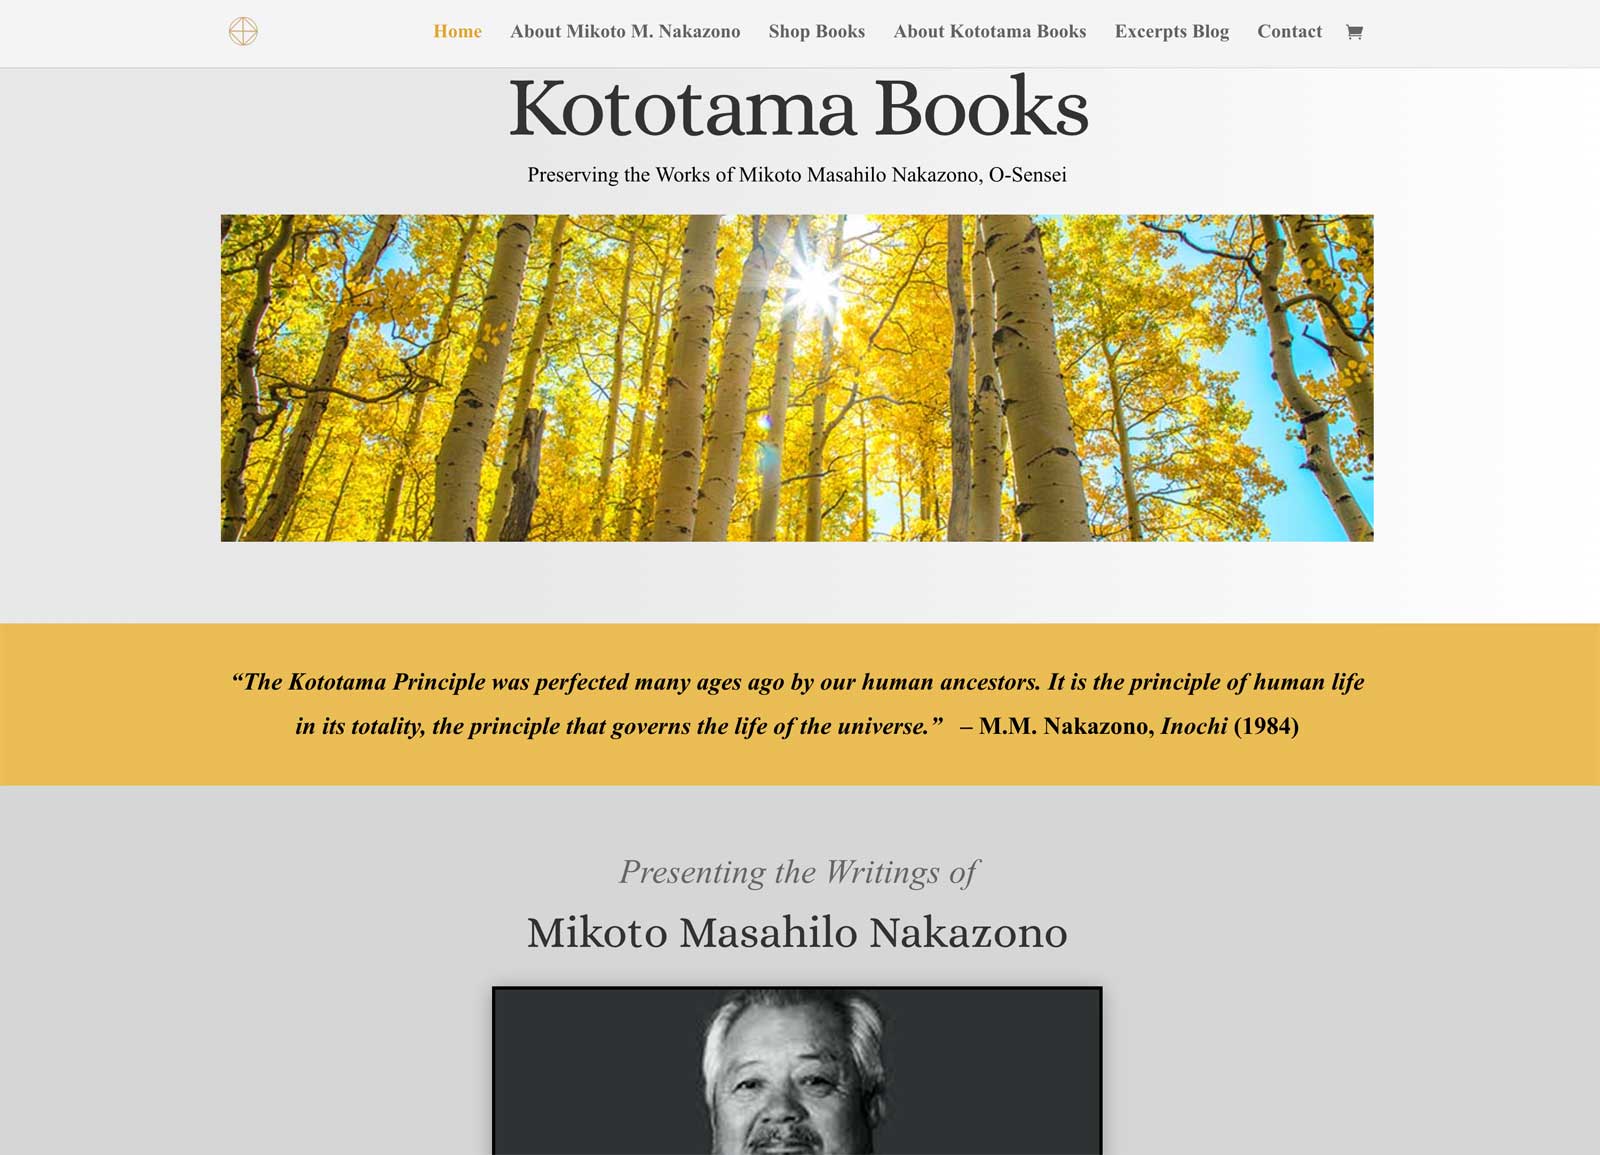 Kototama Books